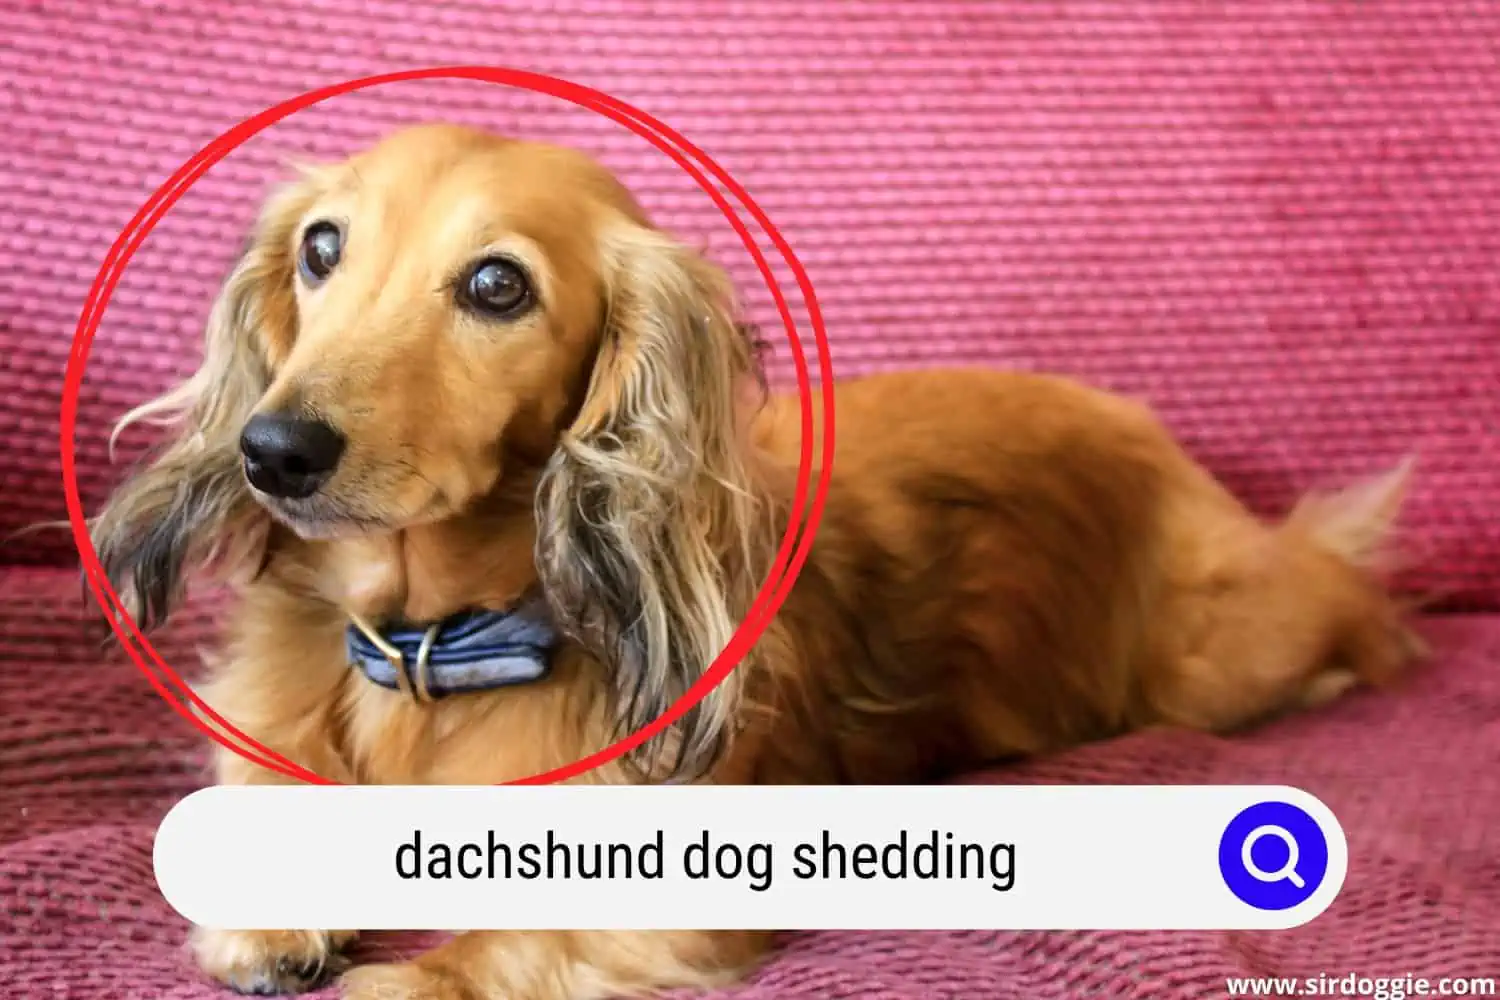 Pretty Dachshund dog lying in a pink couch